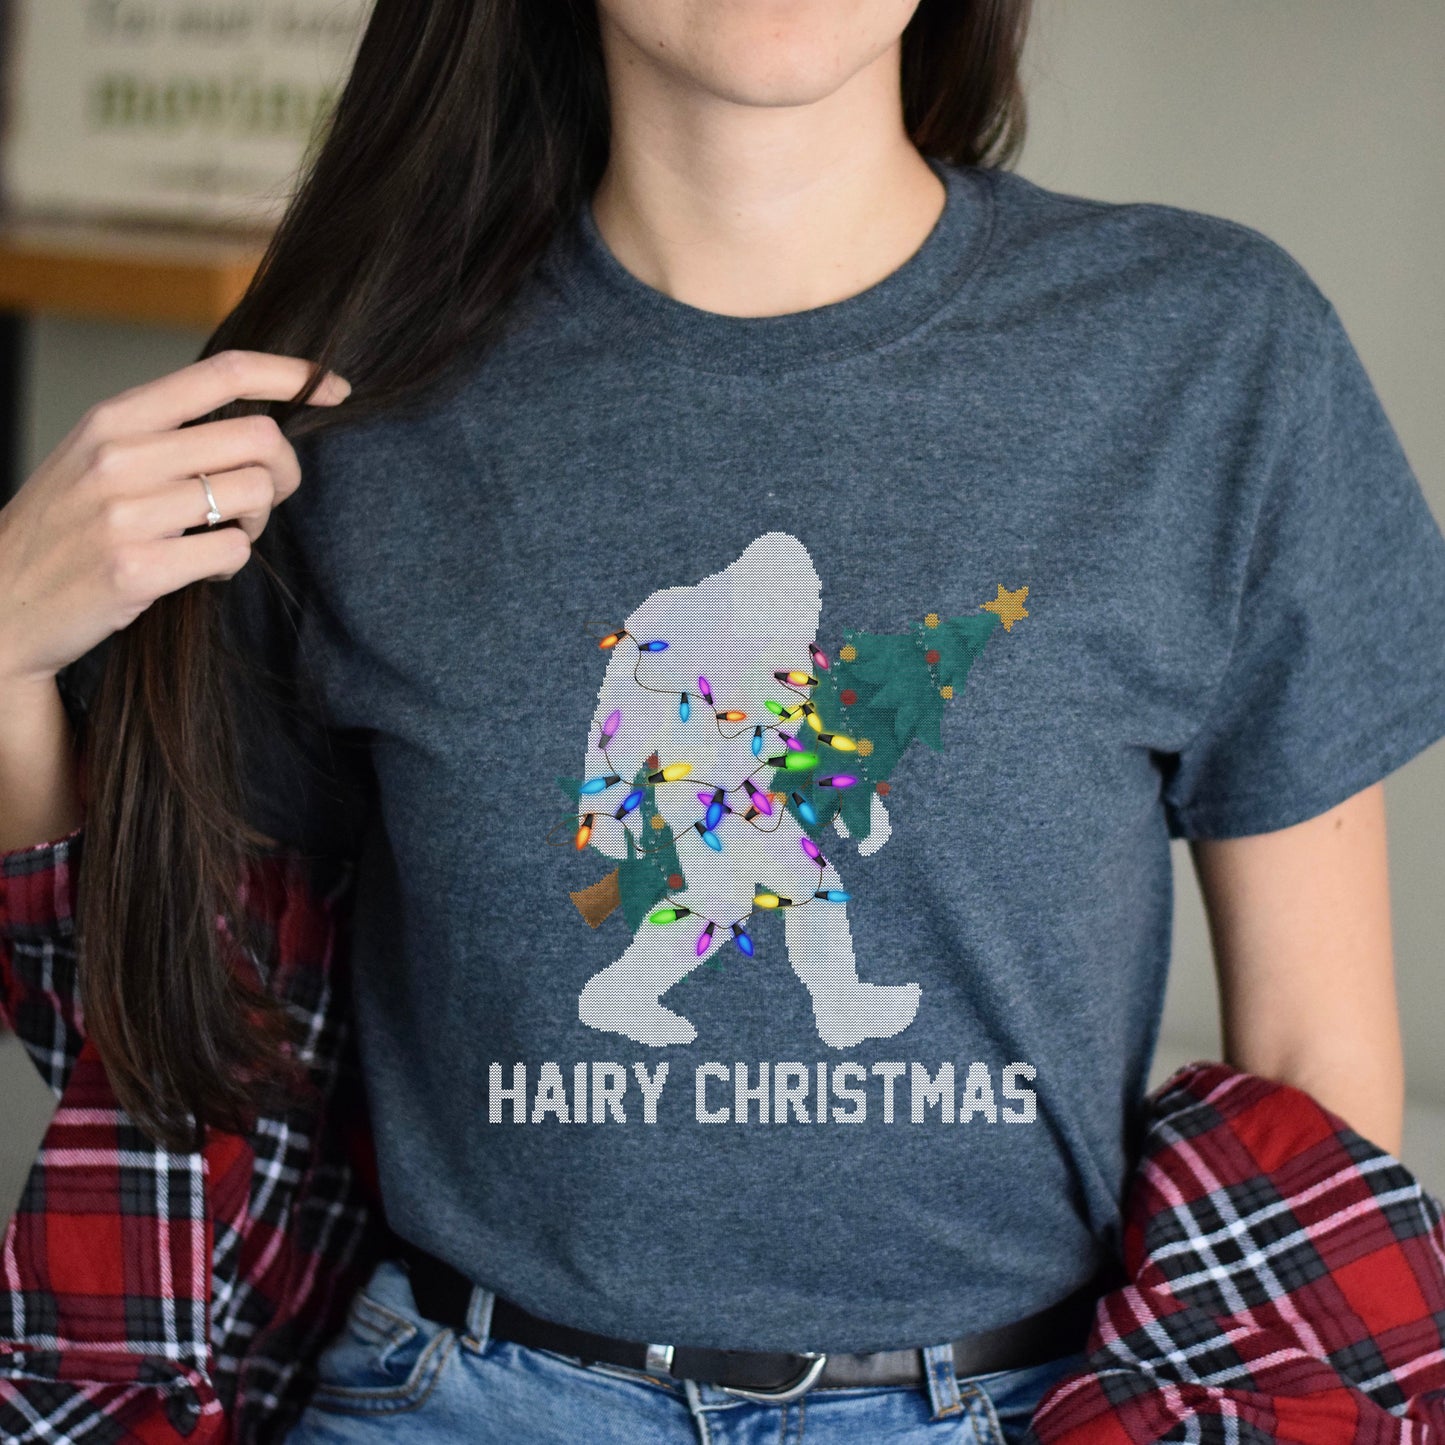 Hairy Christmas Unisex shirt Big foot Holiday tee Black Dark Heather-Dark Heather-Family-Gift-Planet